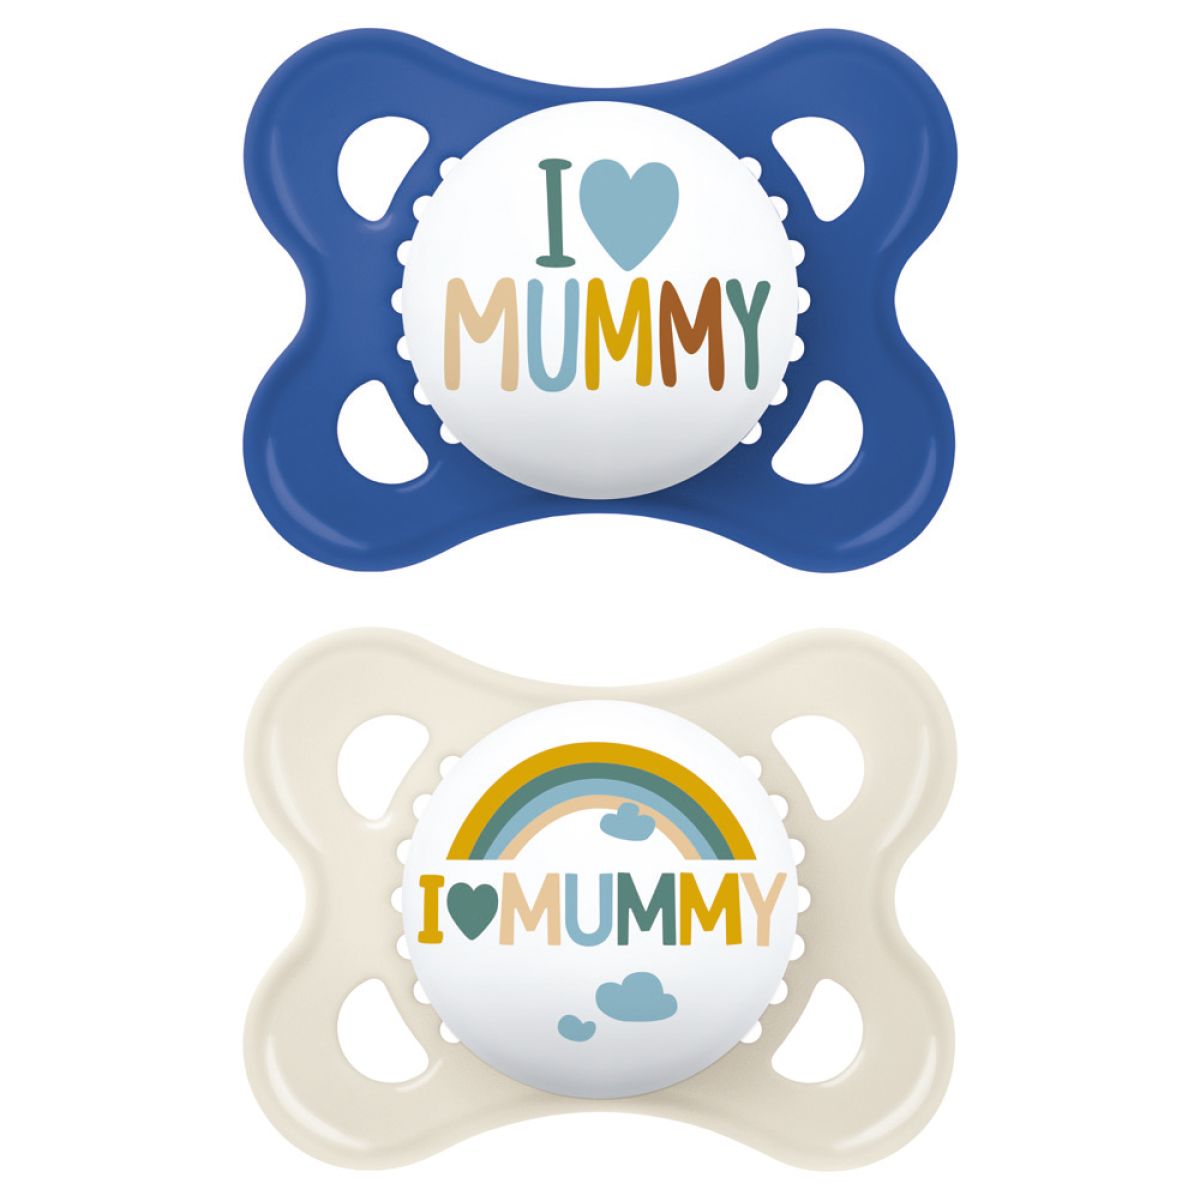 MAM Original 2-6 Love Mummy